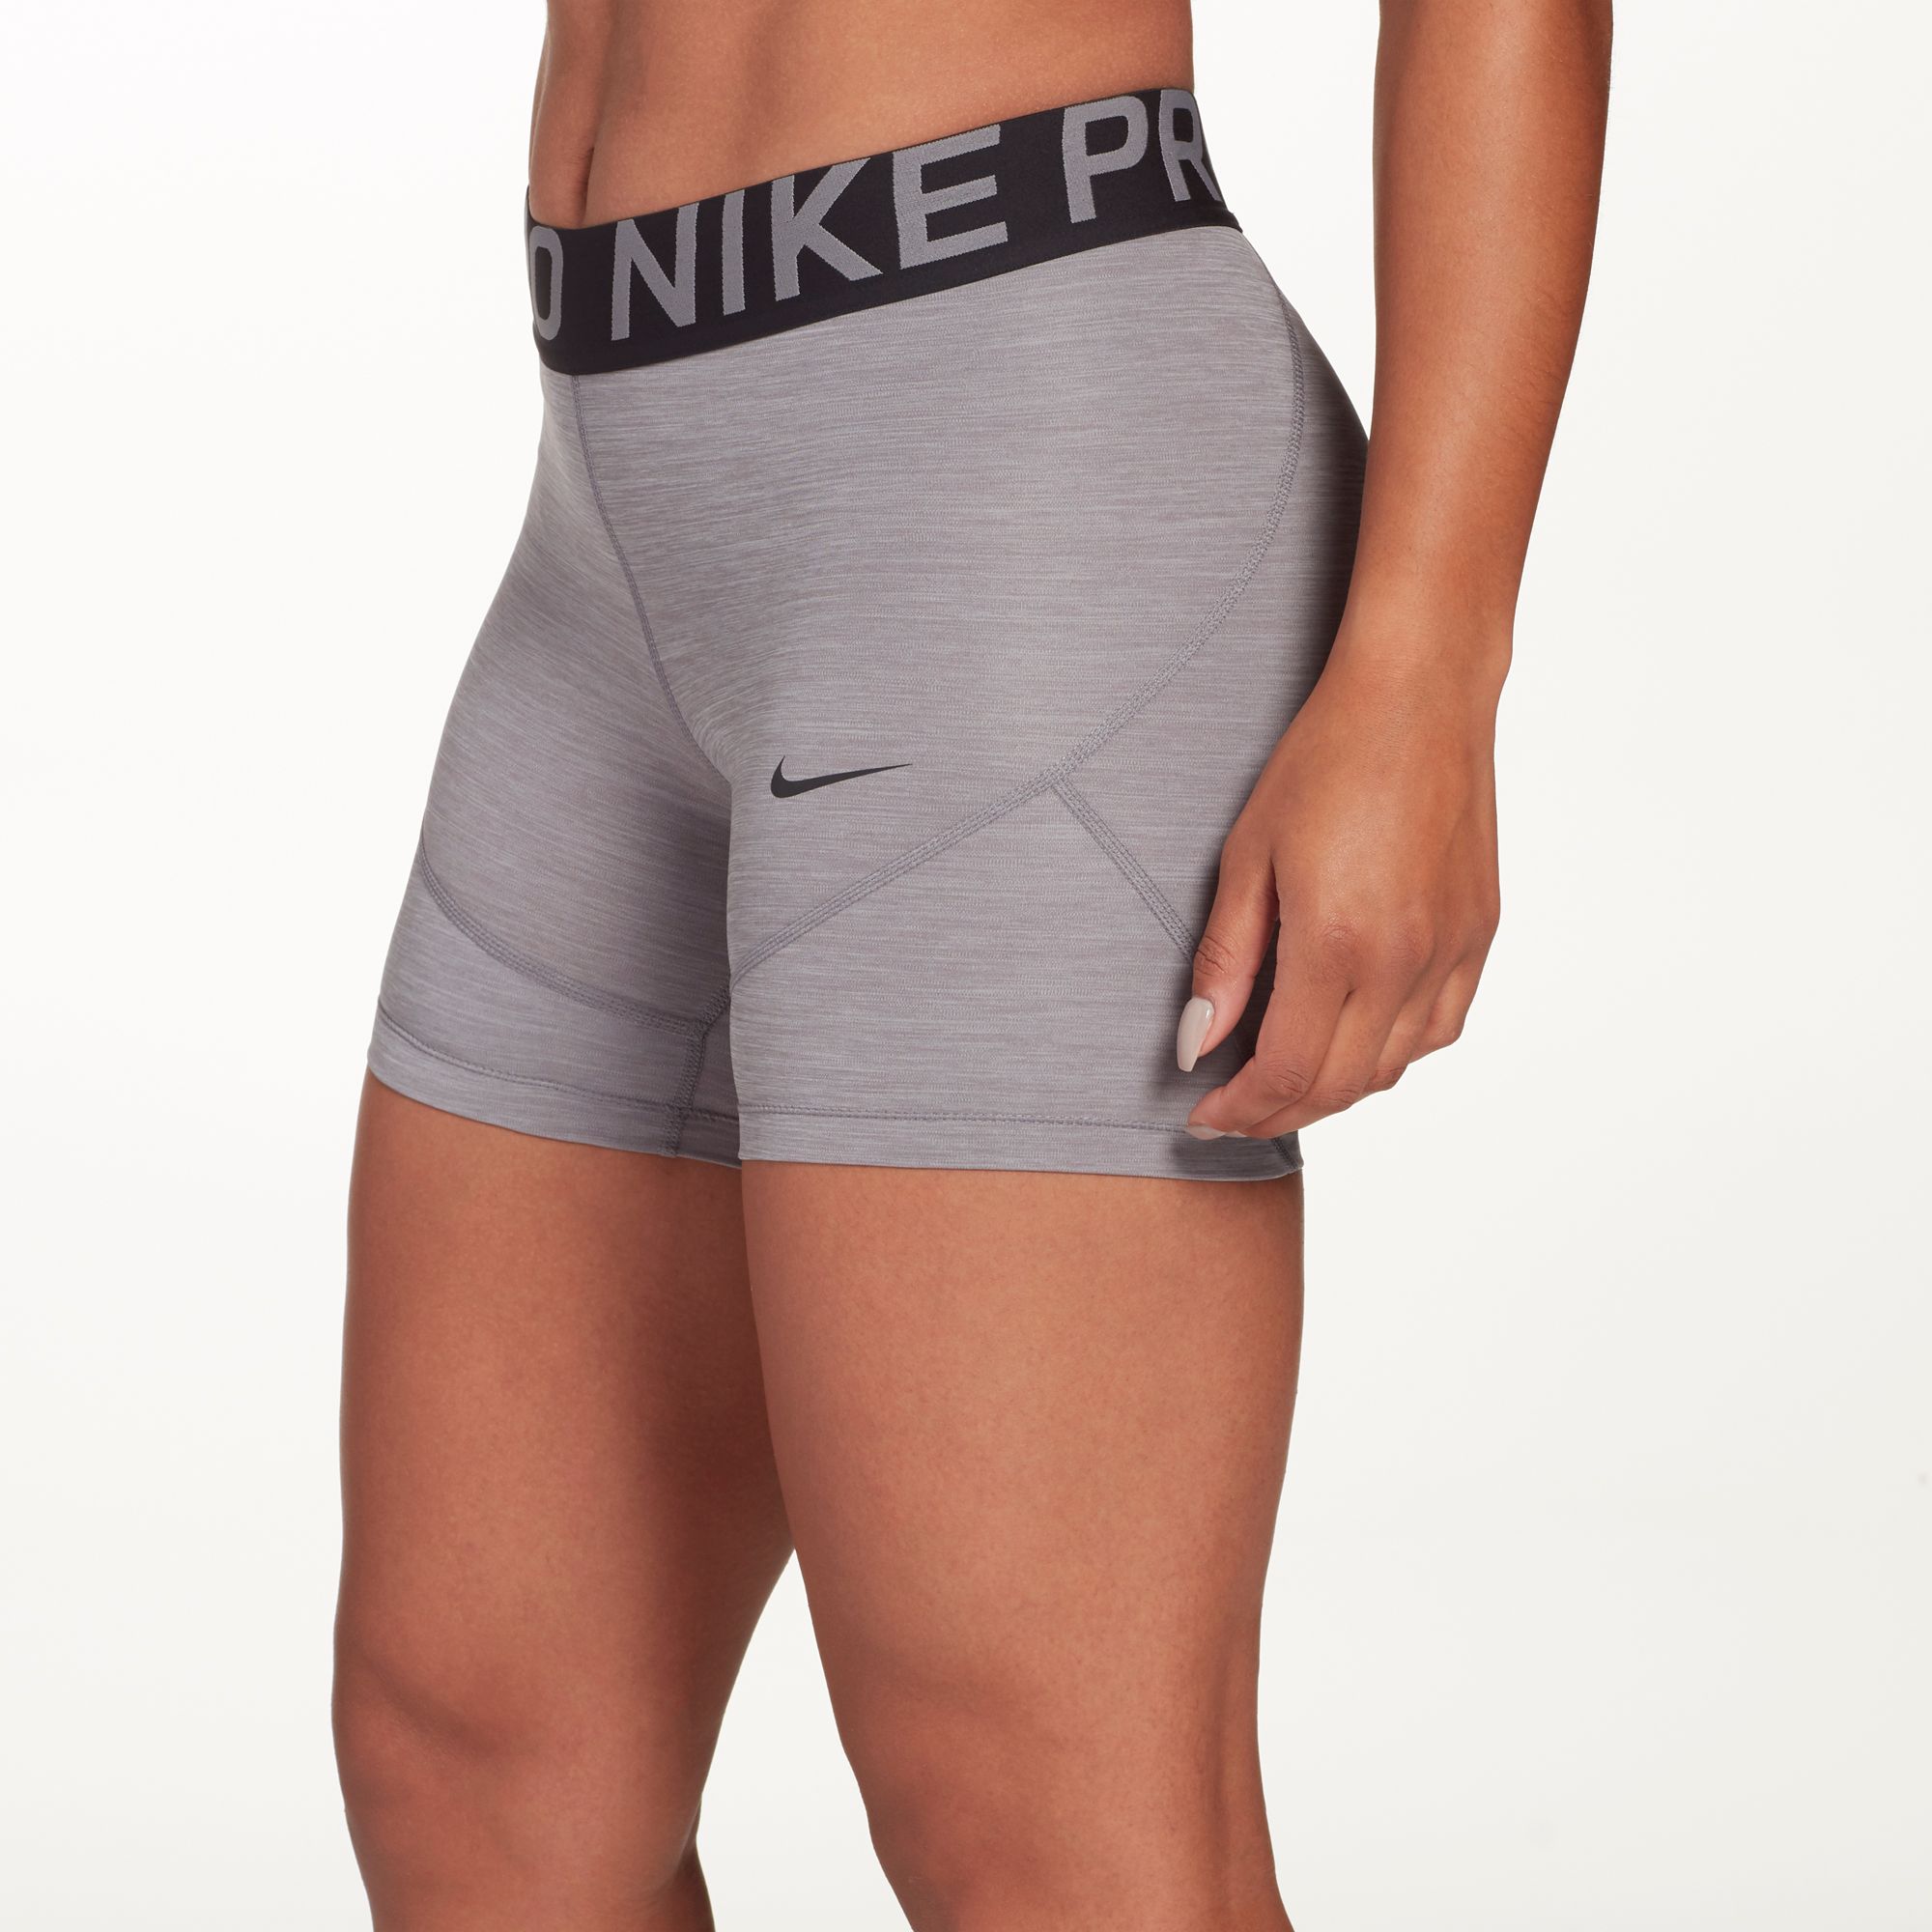 nike pro womens 5in shorts